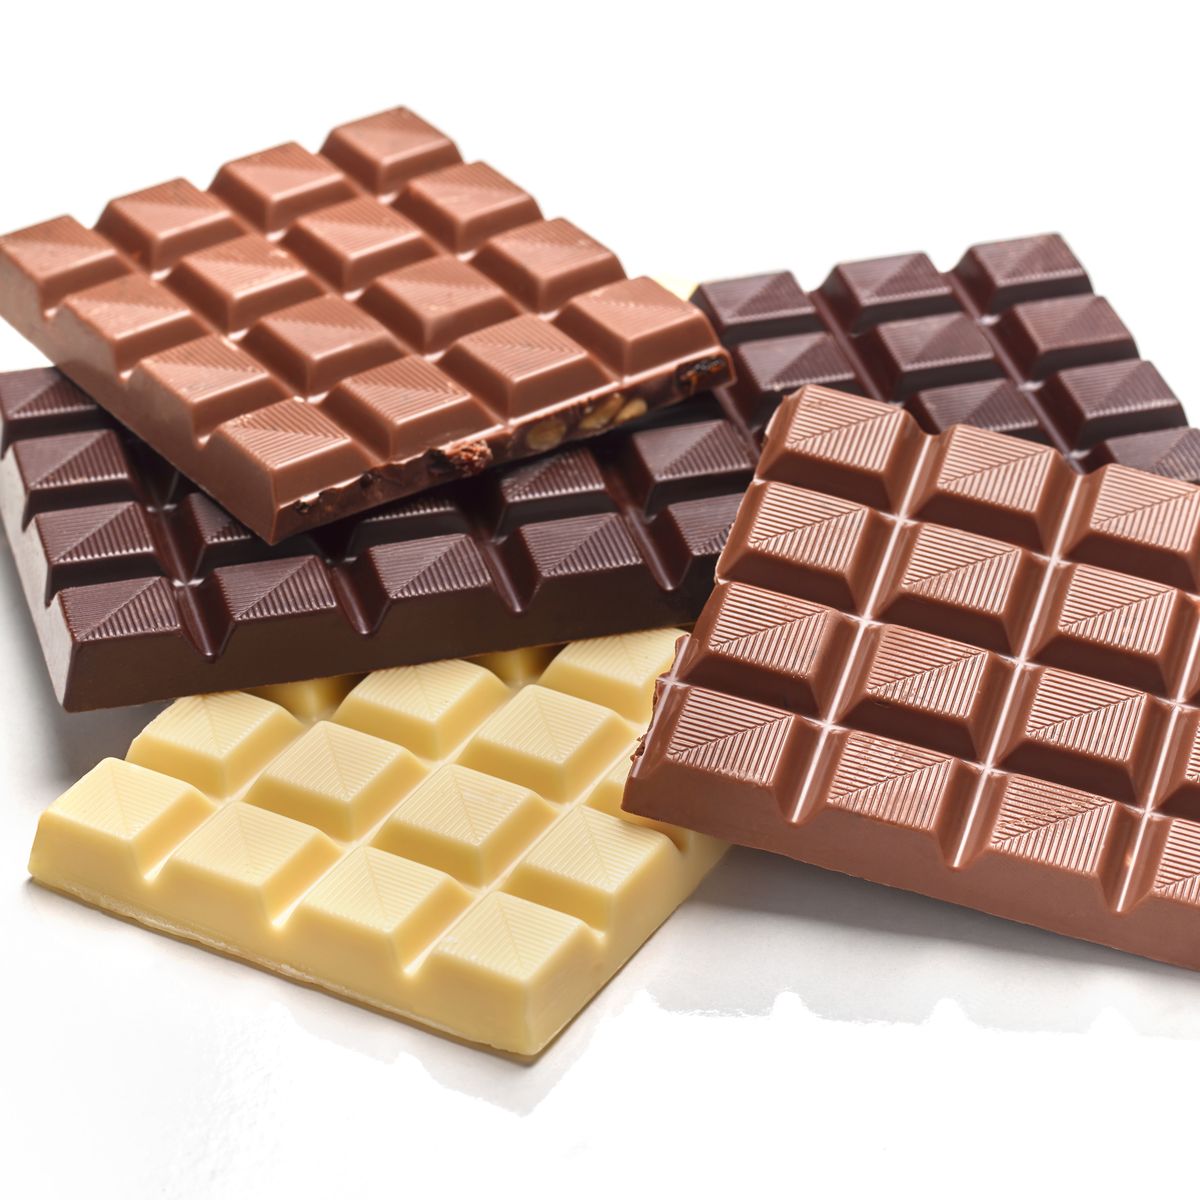 Mejores chocolates marca blanca: ¿Carrefour, Mercadona, Lidl...?